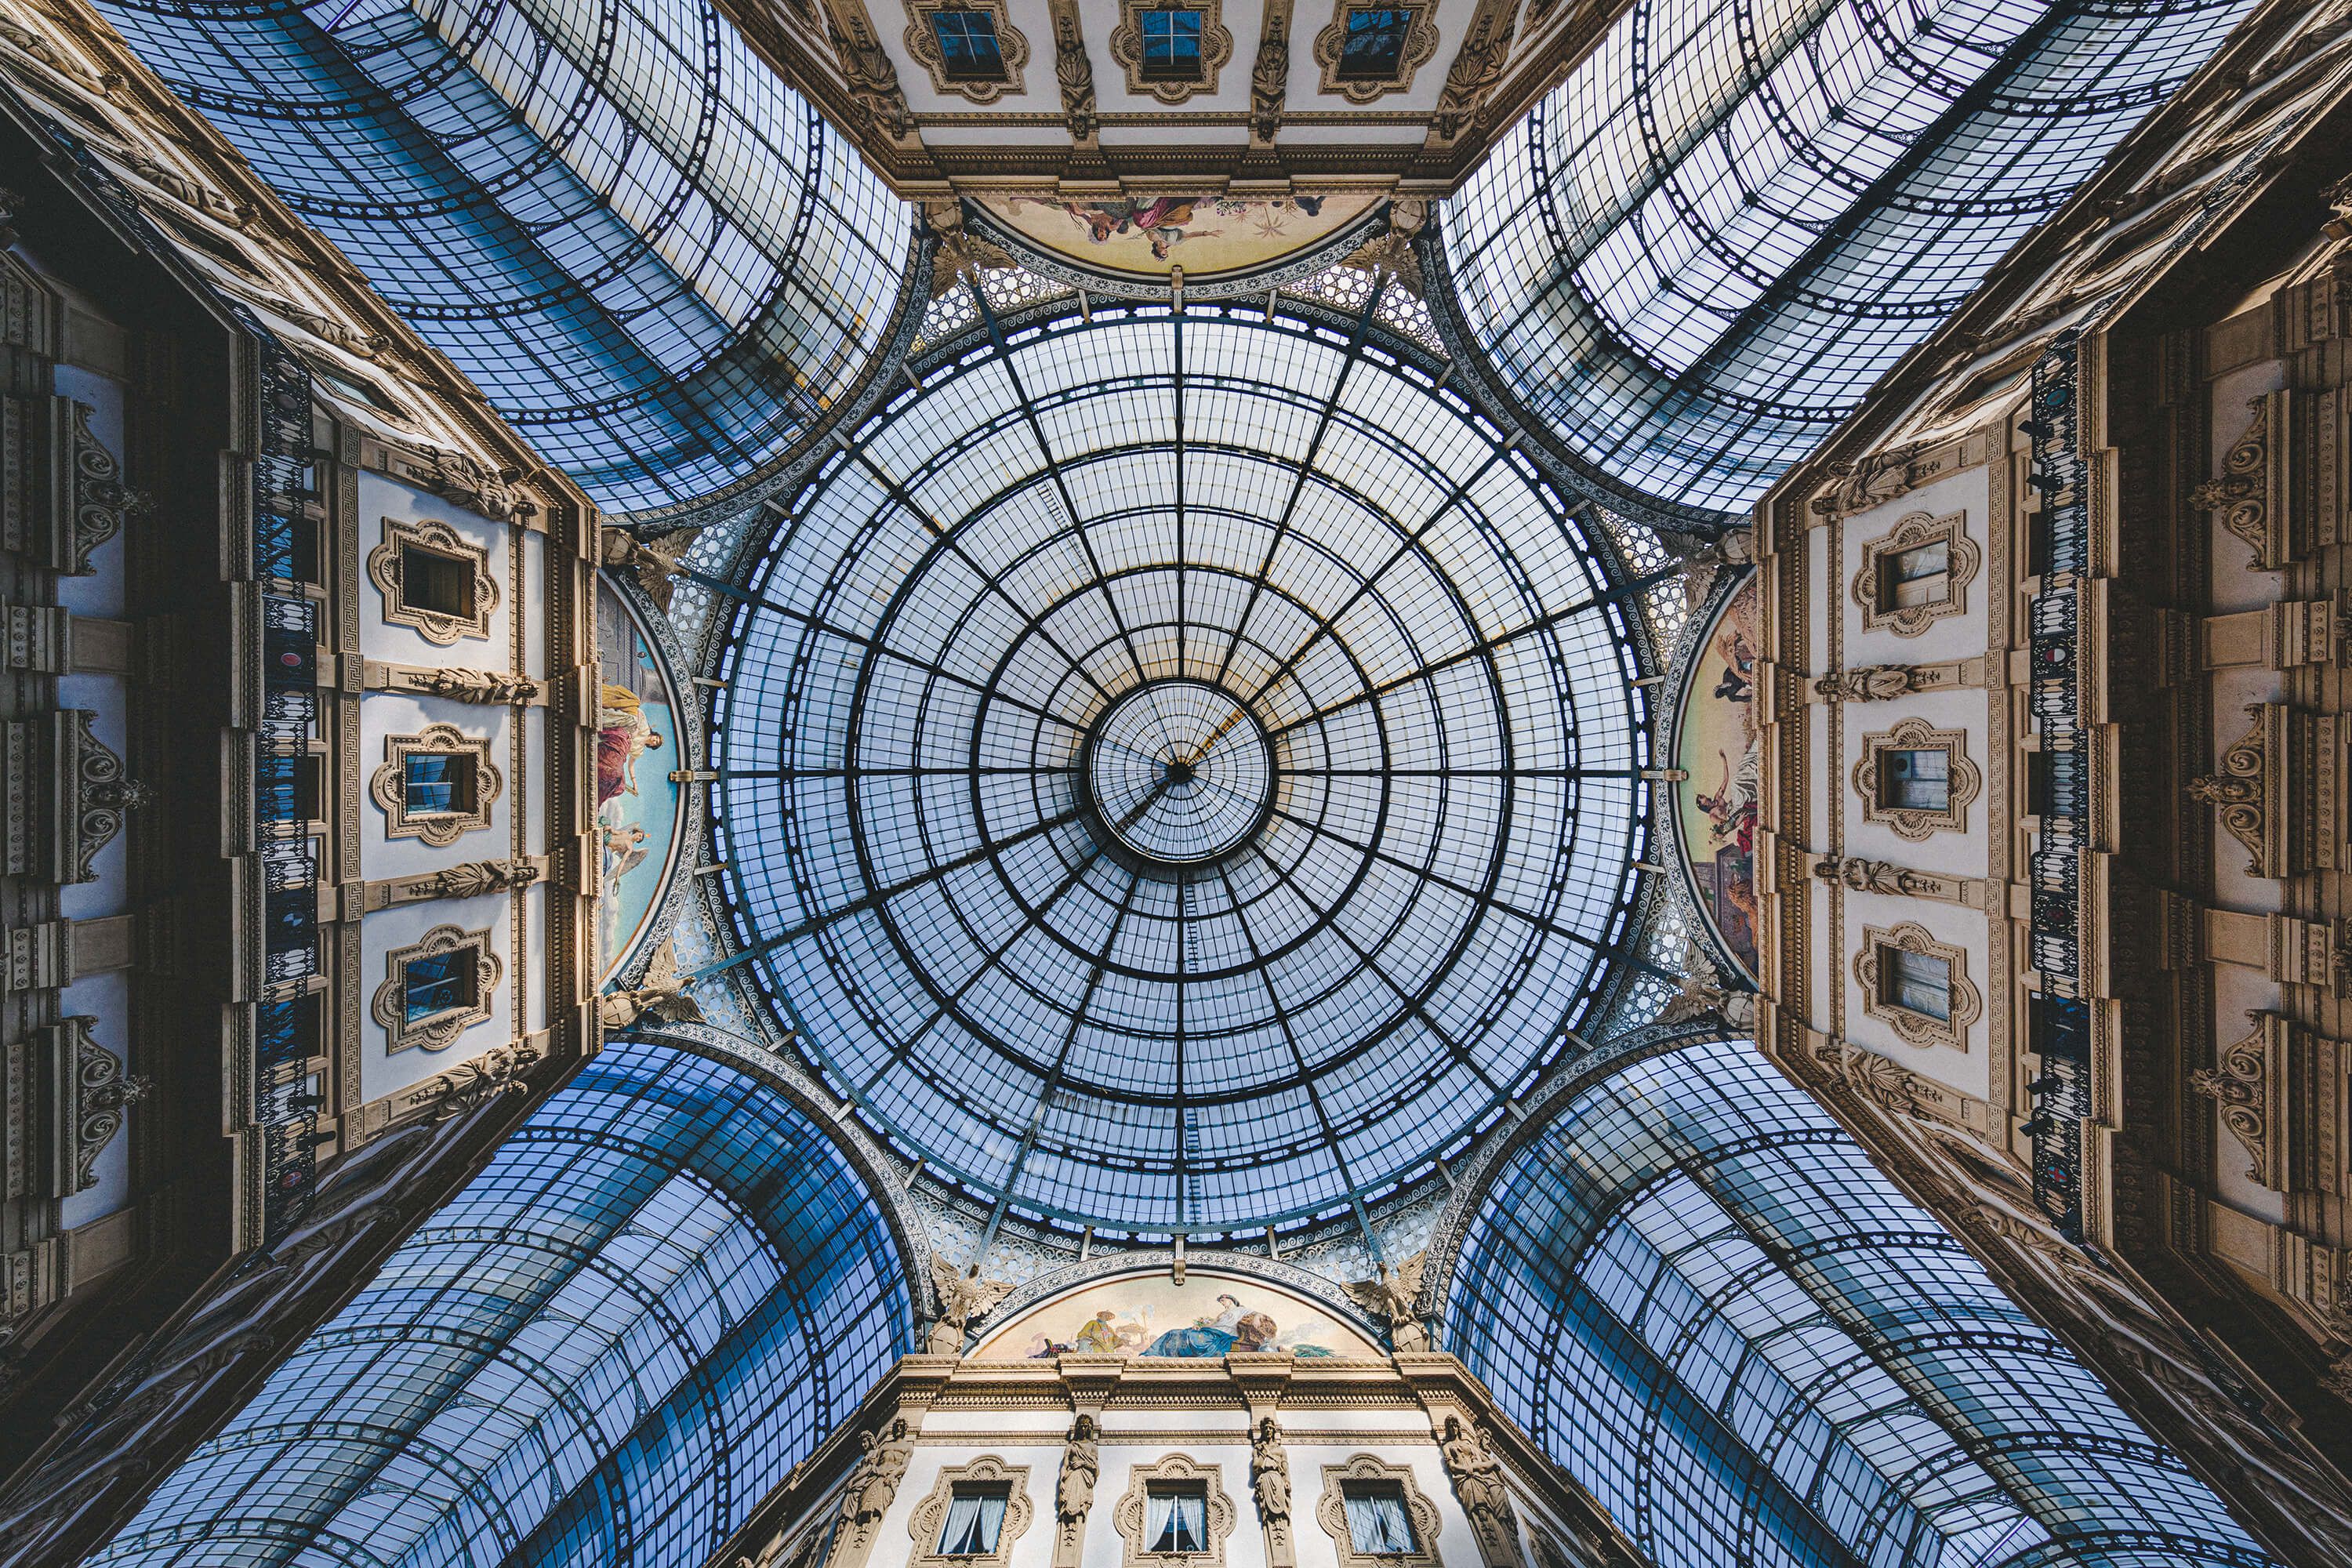  Gallery of Milan